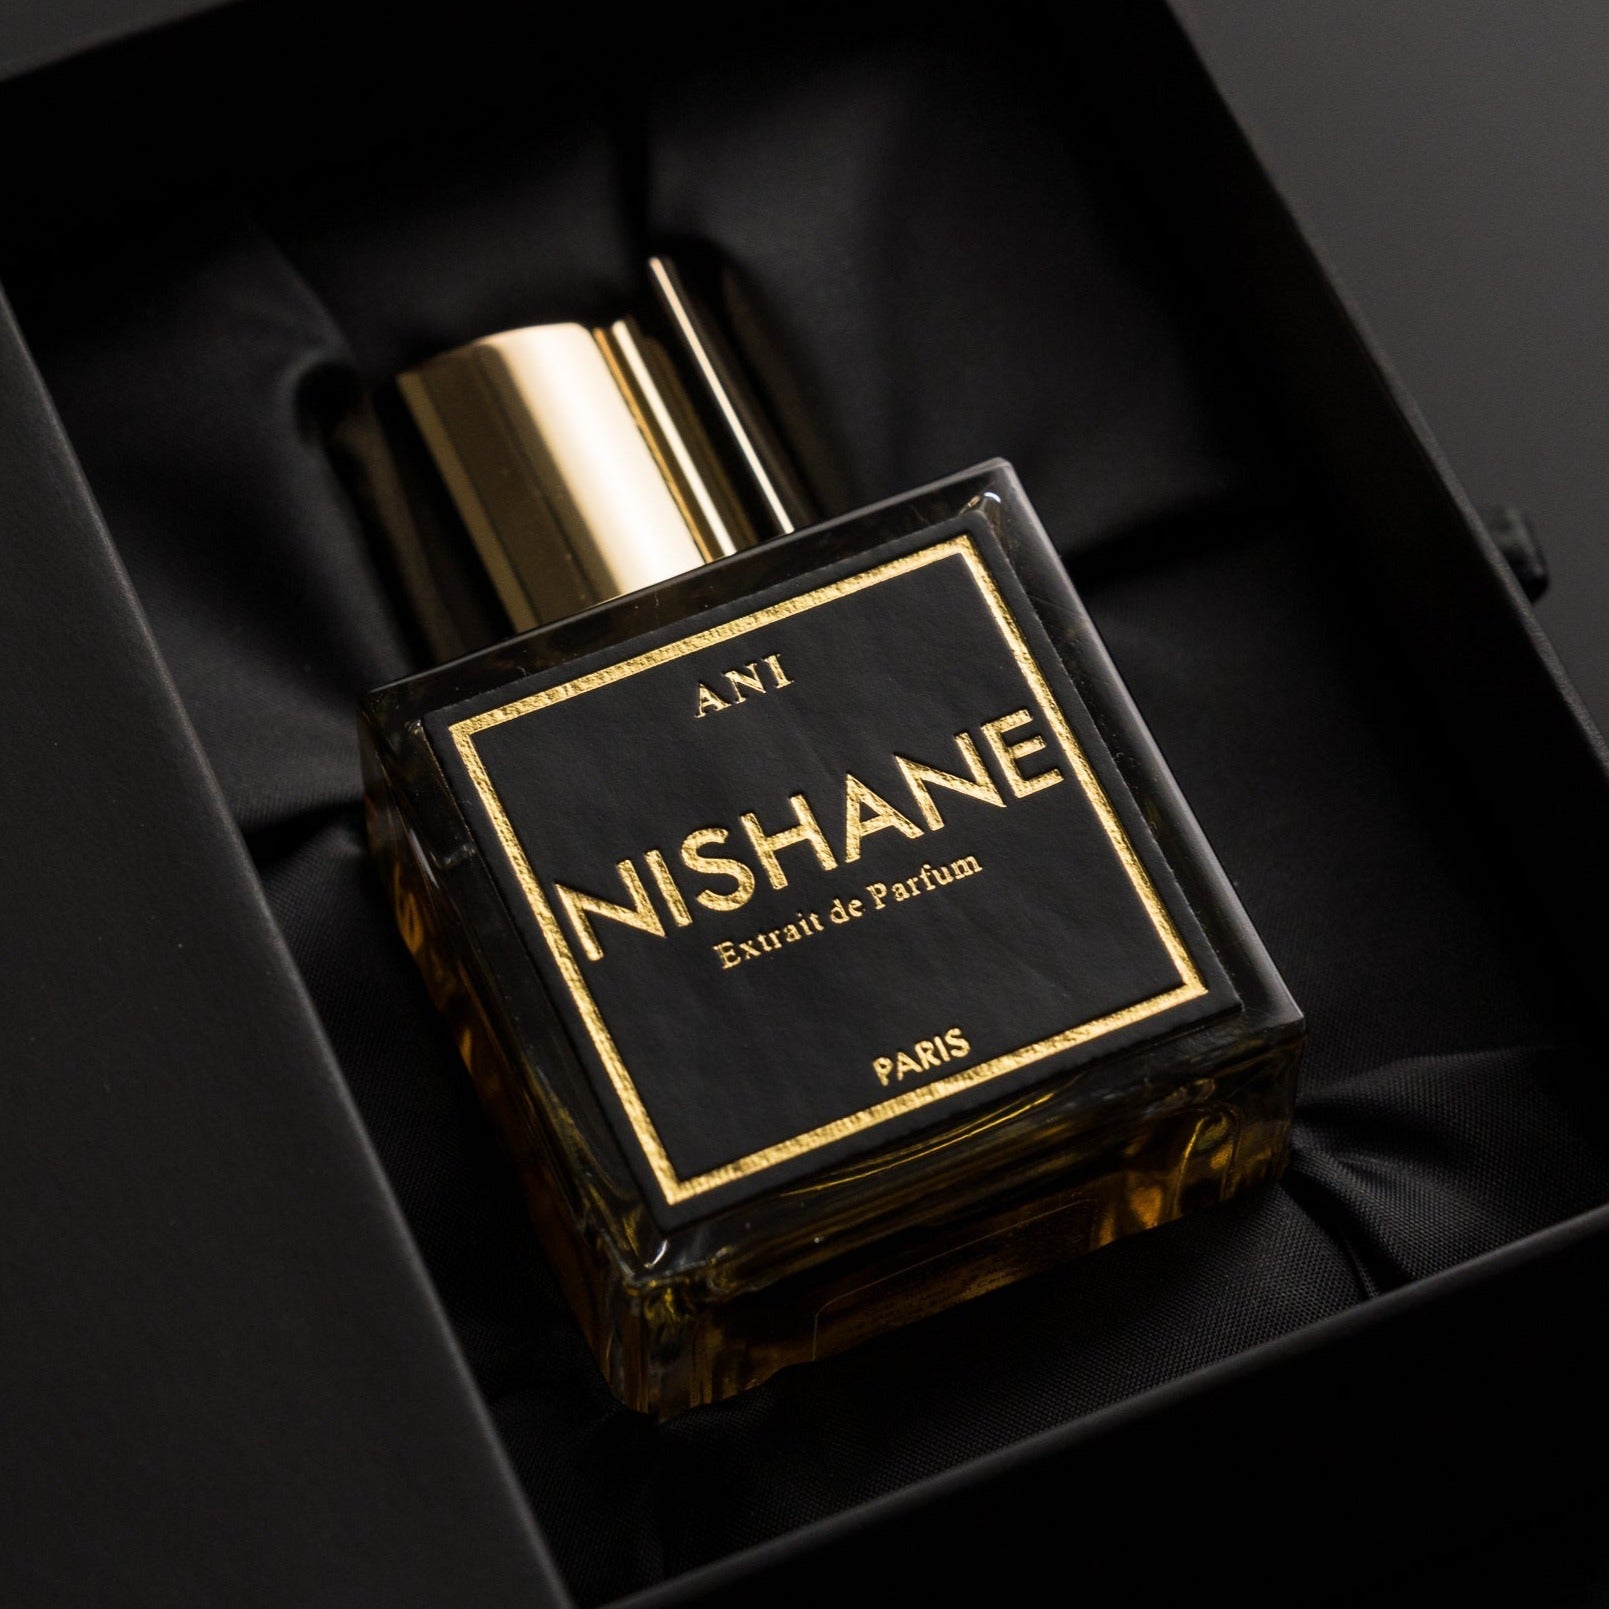 Nishane Ani Extrait De Parfum | My Perfume Shop Australia